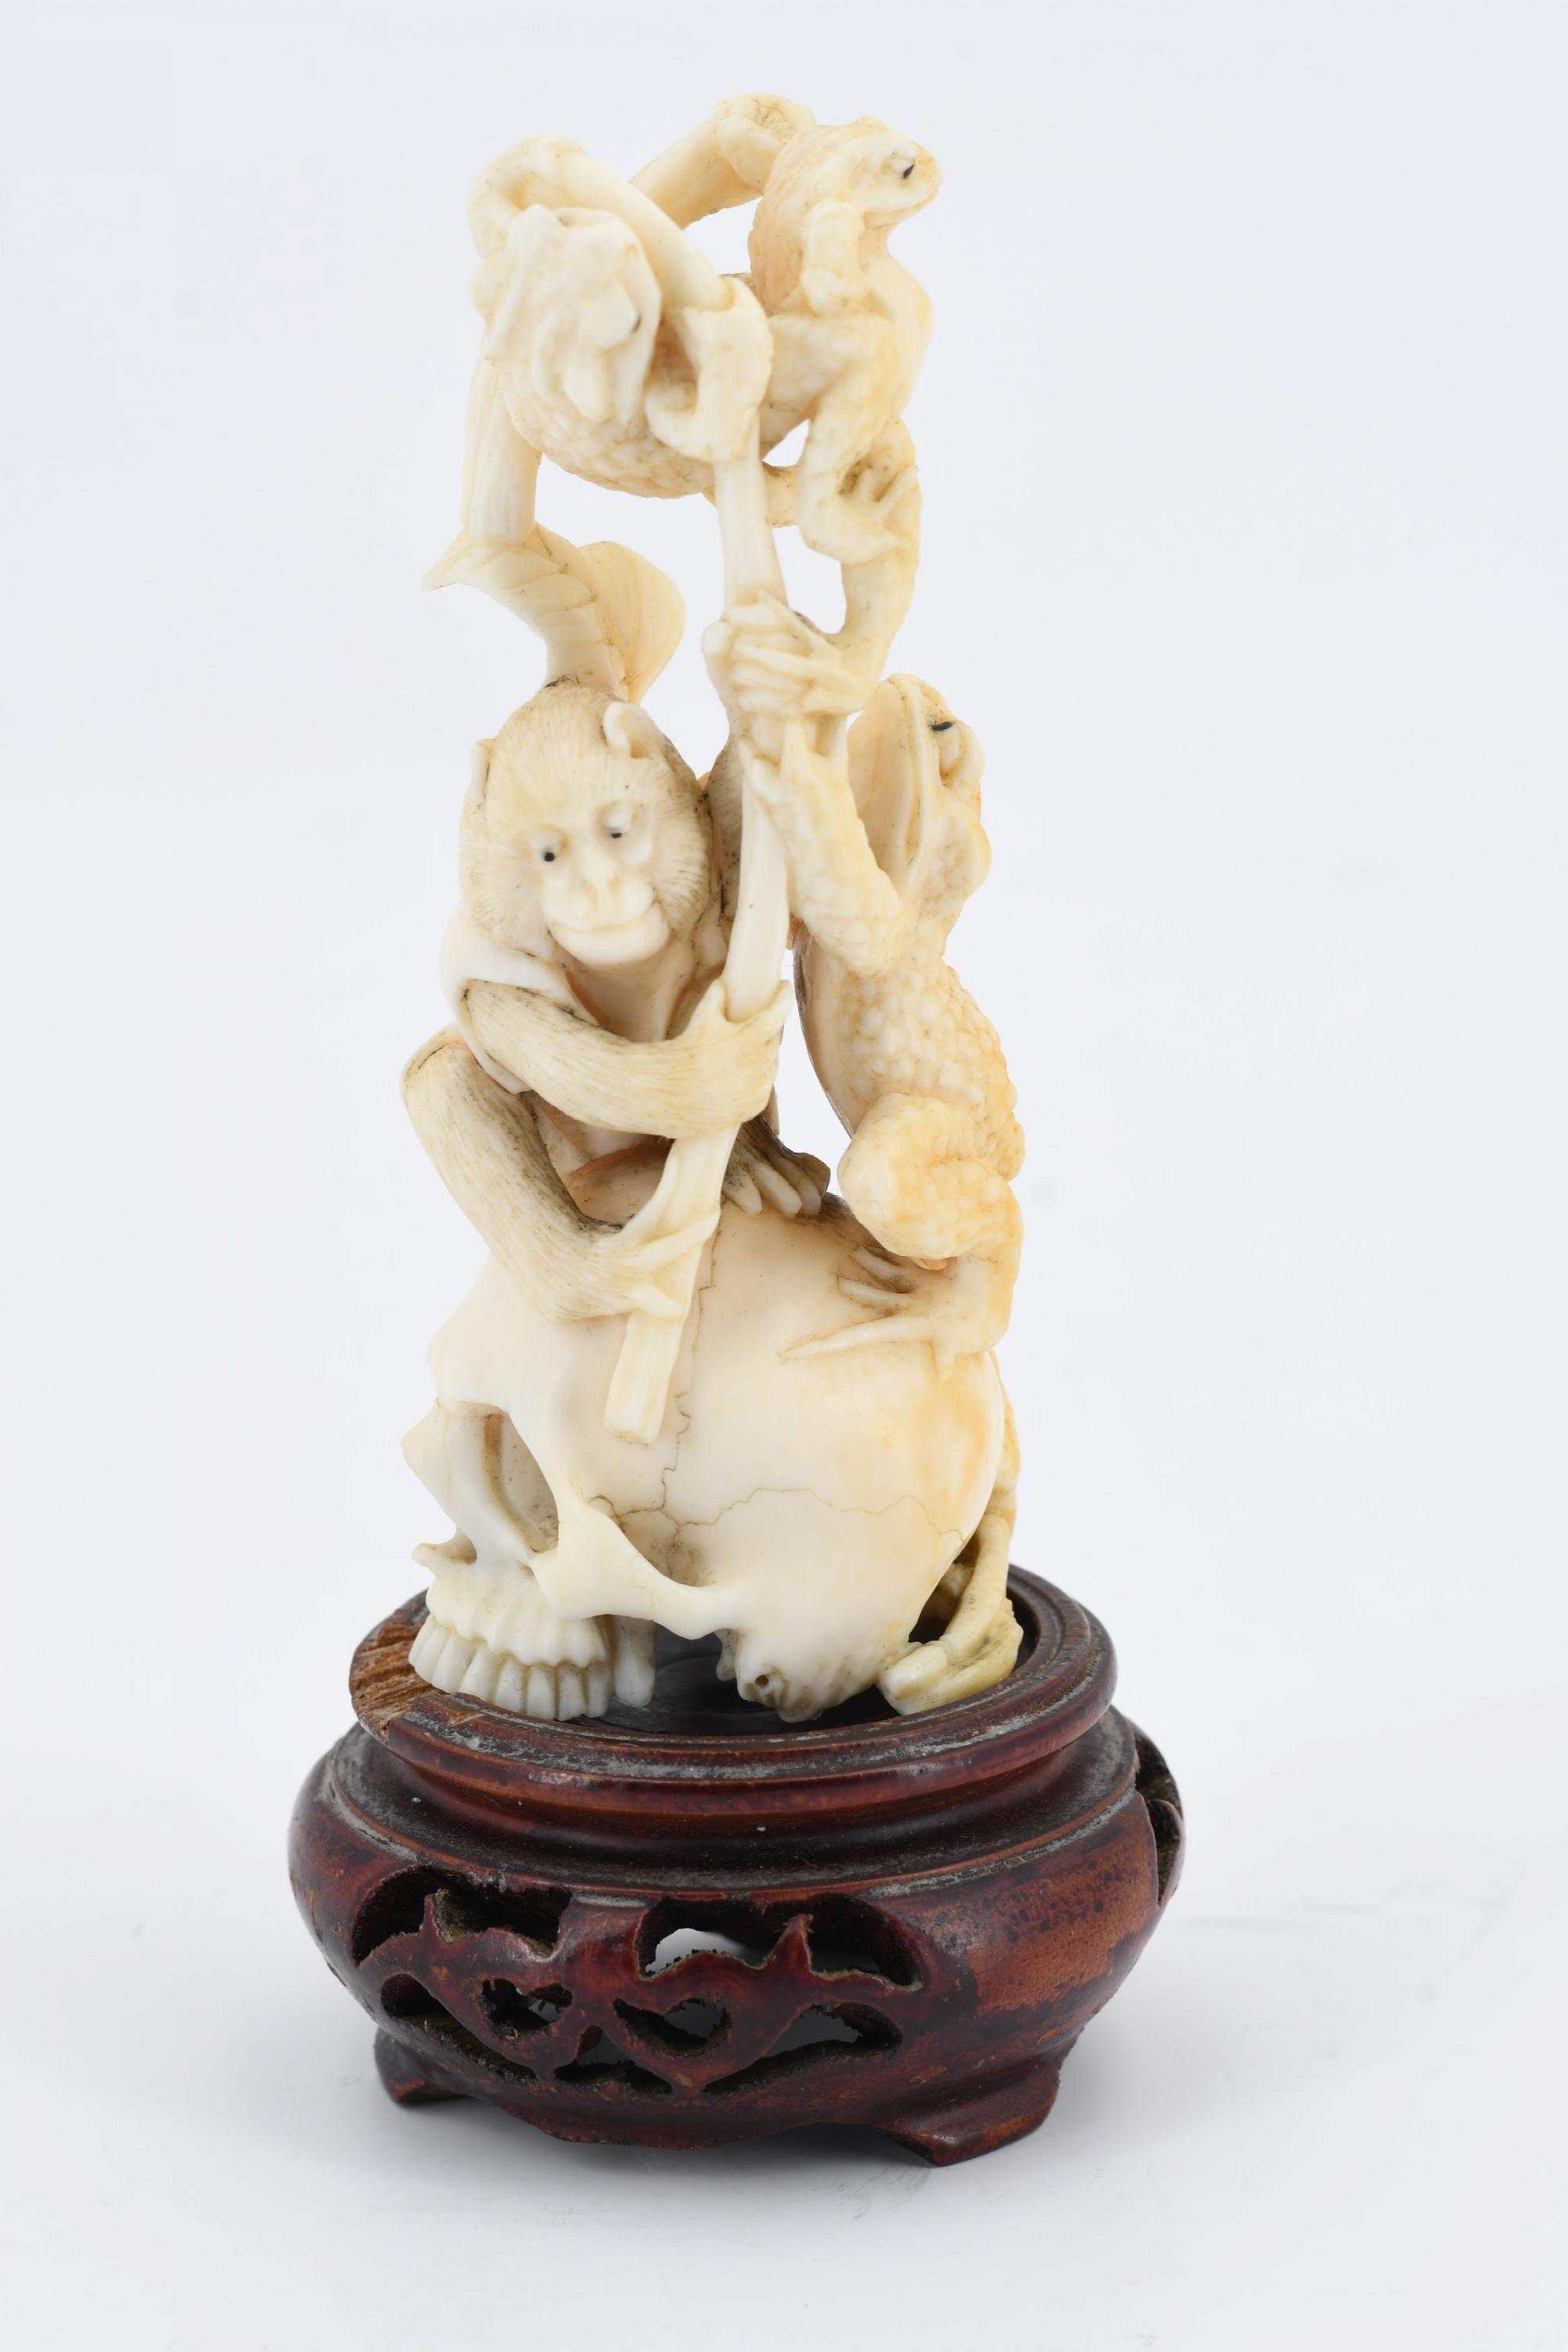 Ivory okimono with monkey and frogs on skull - Image 3 of 6